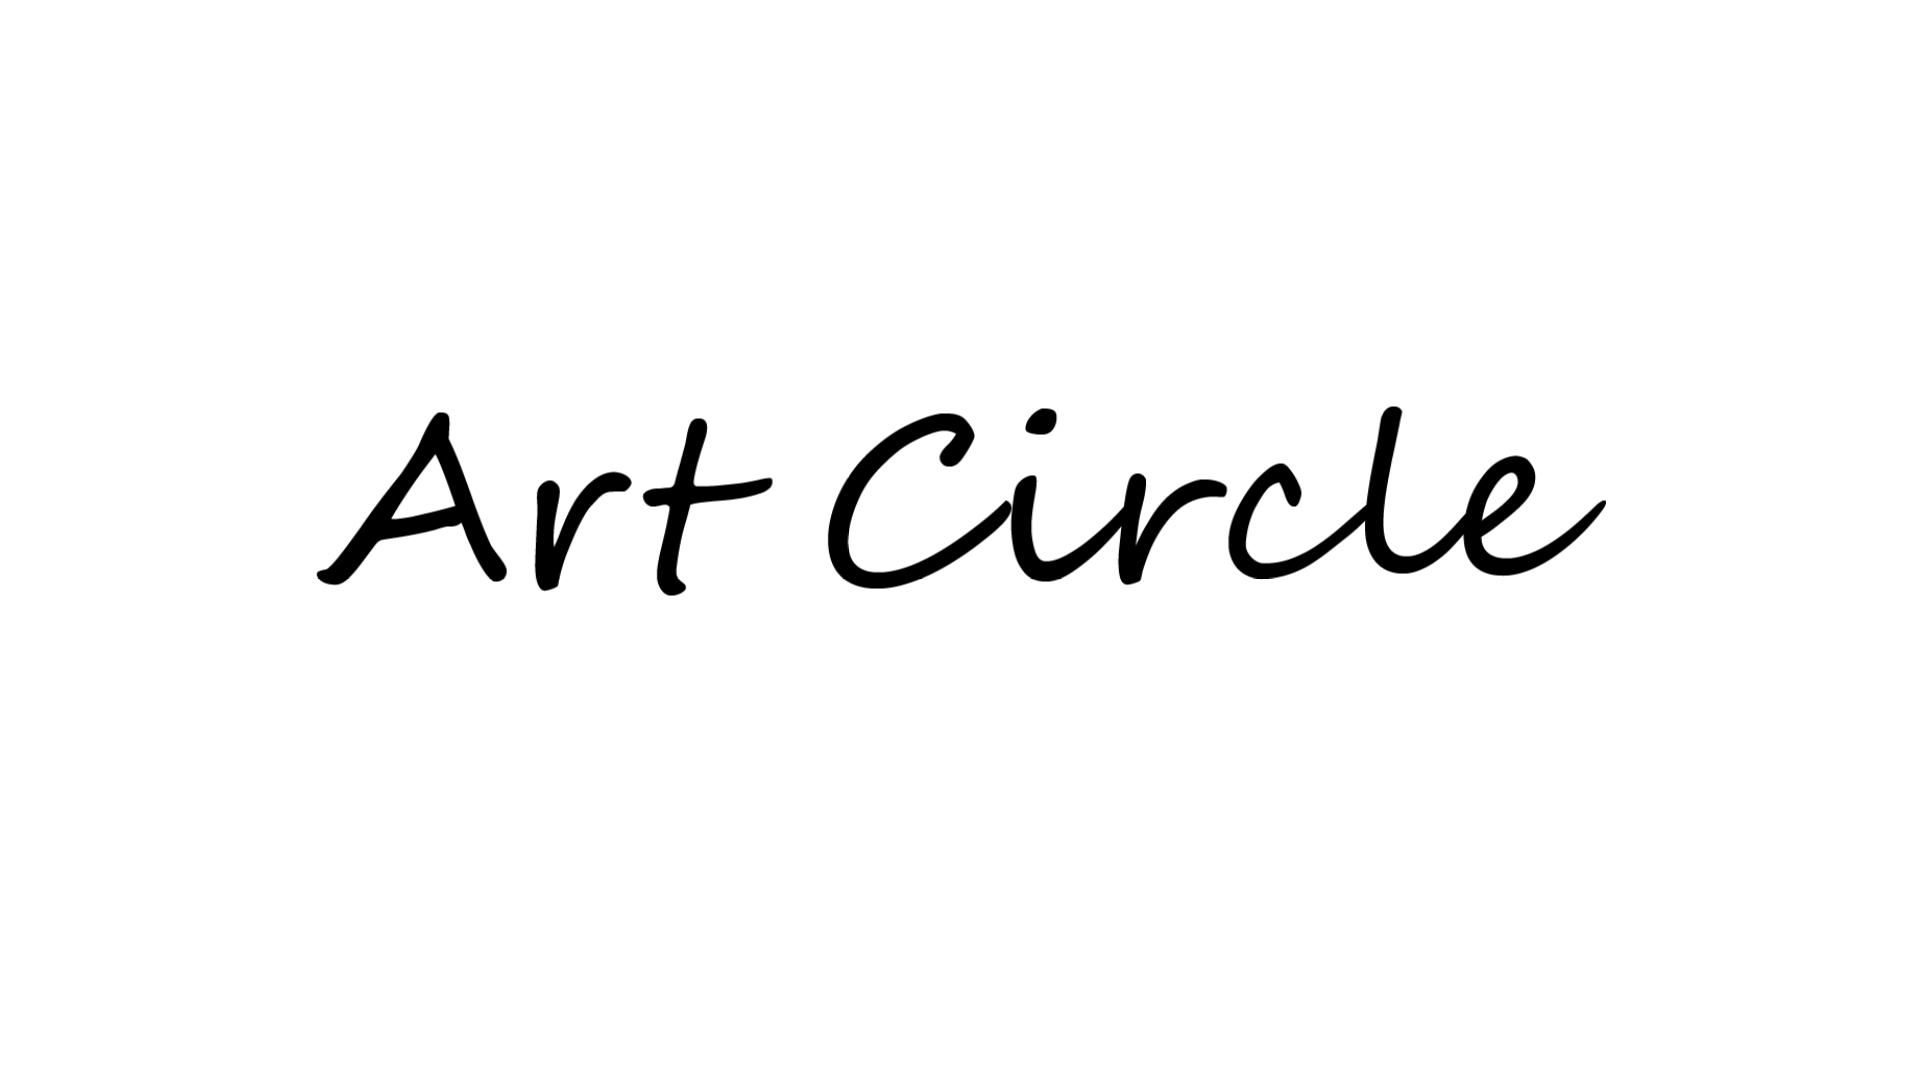 Art circle original